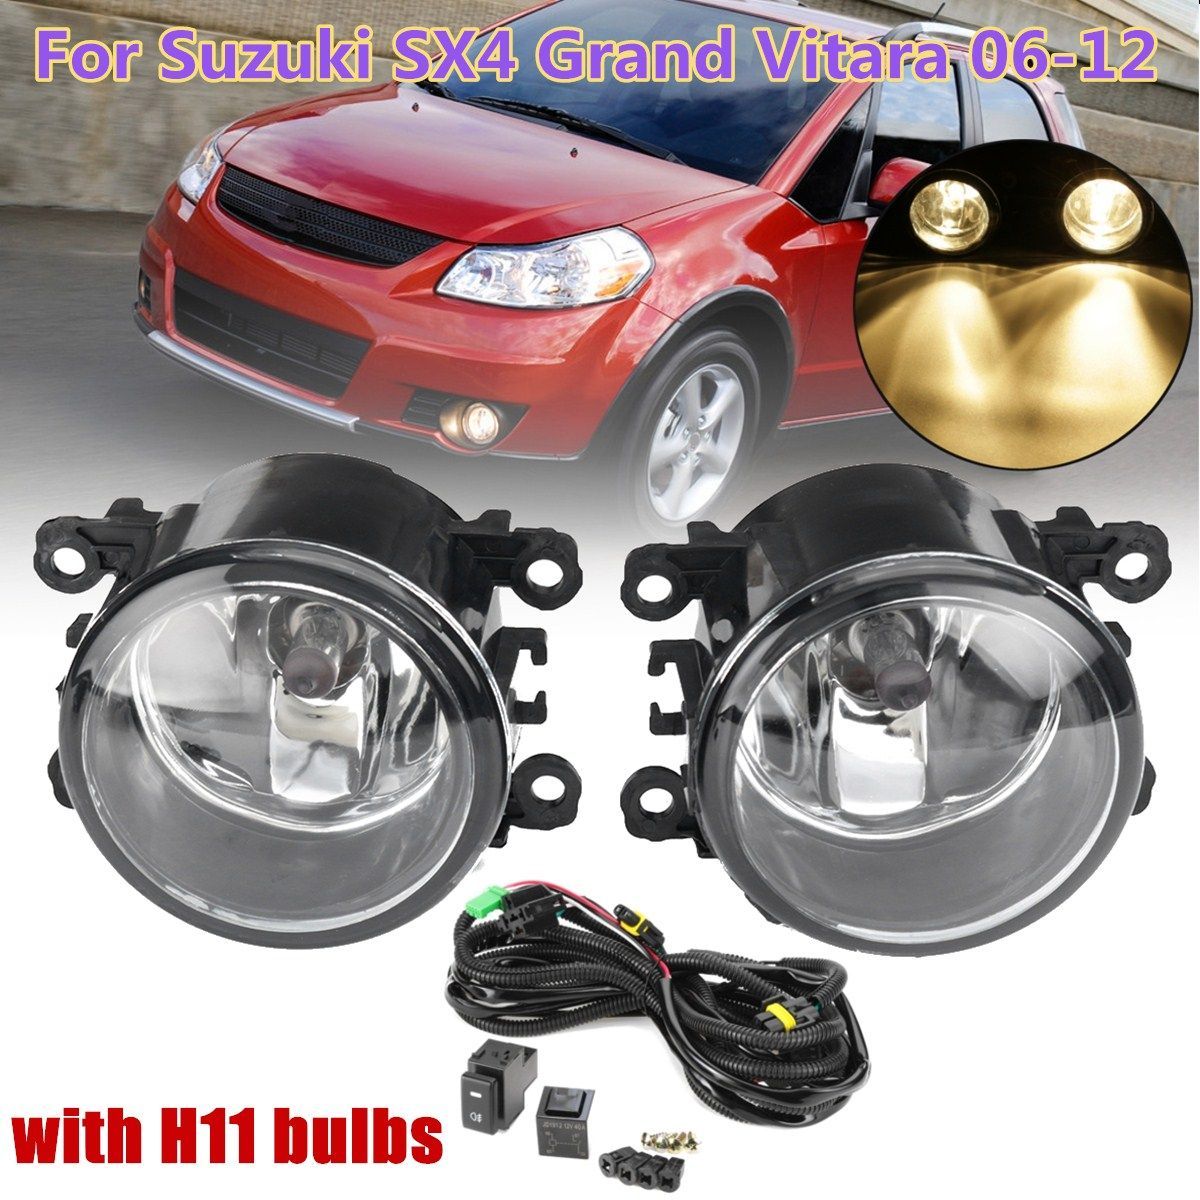 2Pcs-Car-Front-Fog-Lights-With-Wiring-H11-Bulbs-Relay-Kit-For-Suzuki-SX4-Grand-Vitara-2006-2012-1674363